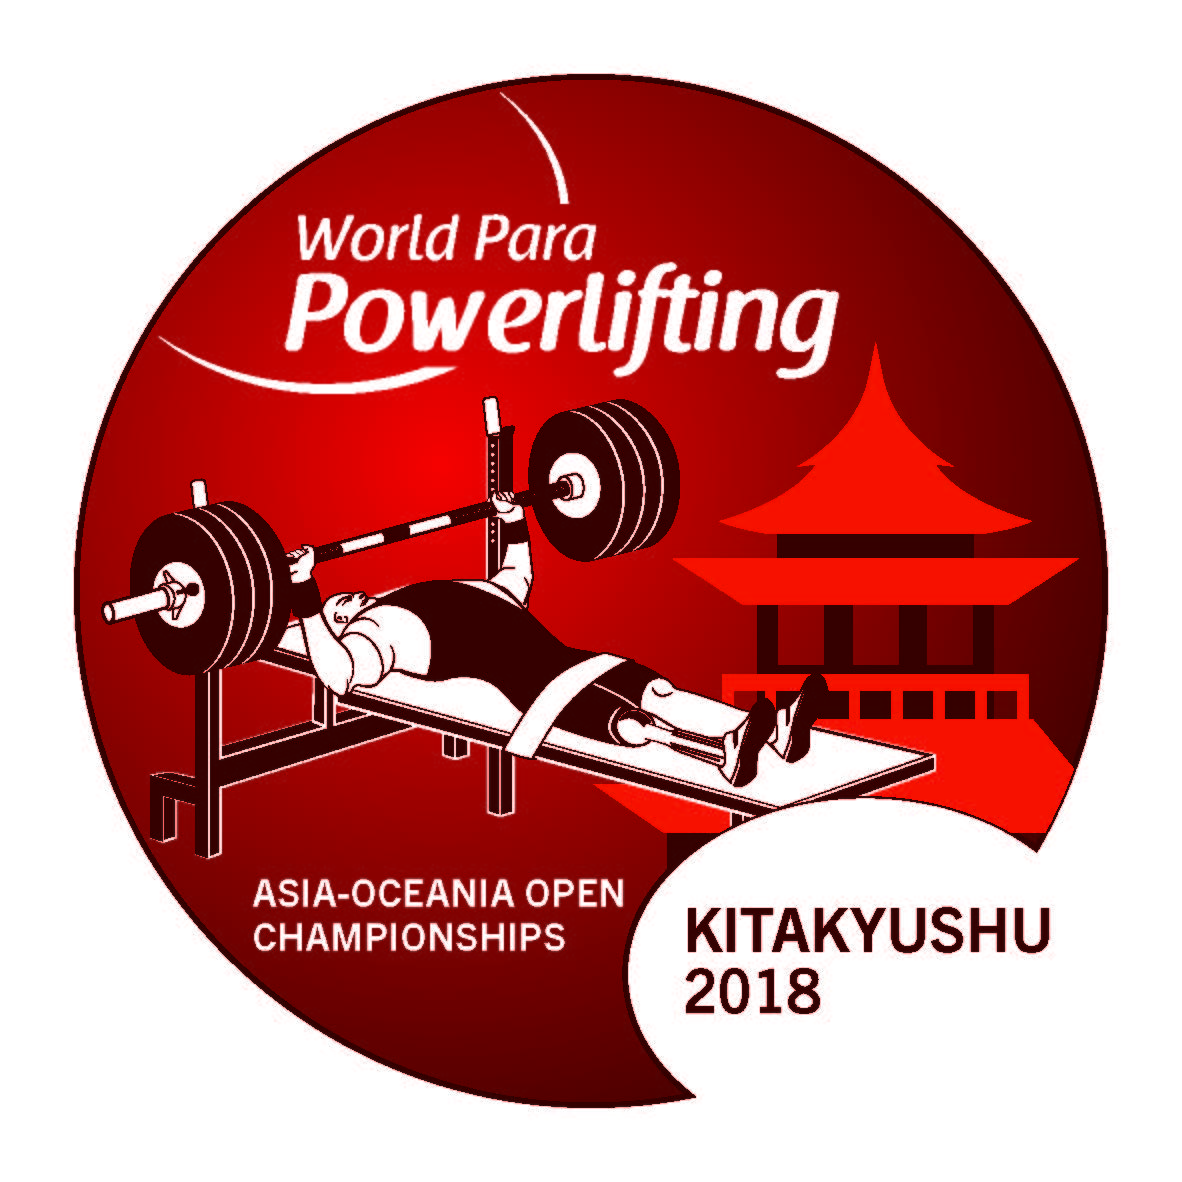 The official logo of the Kitakyushu 2018 World Para Powerlifting Asia-Oceania Championships.